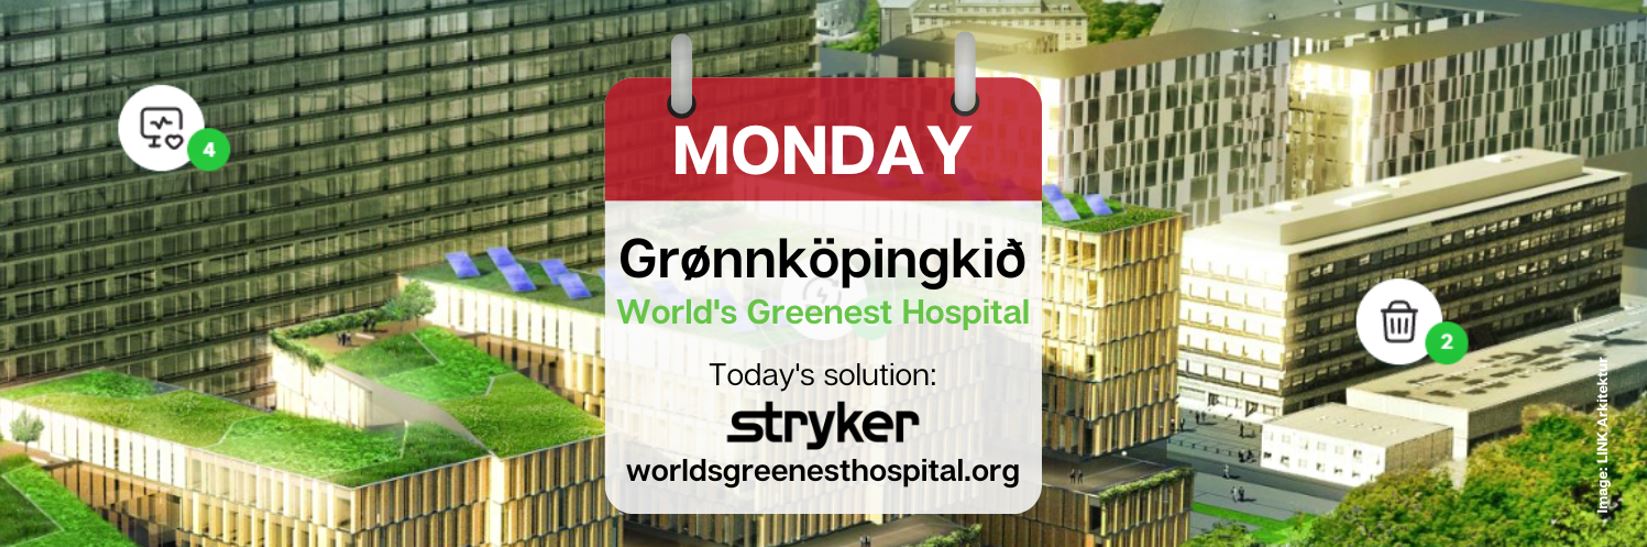 Grønnköpingkið Monday: Solution by Stryker